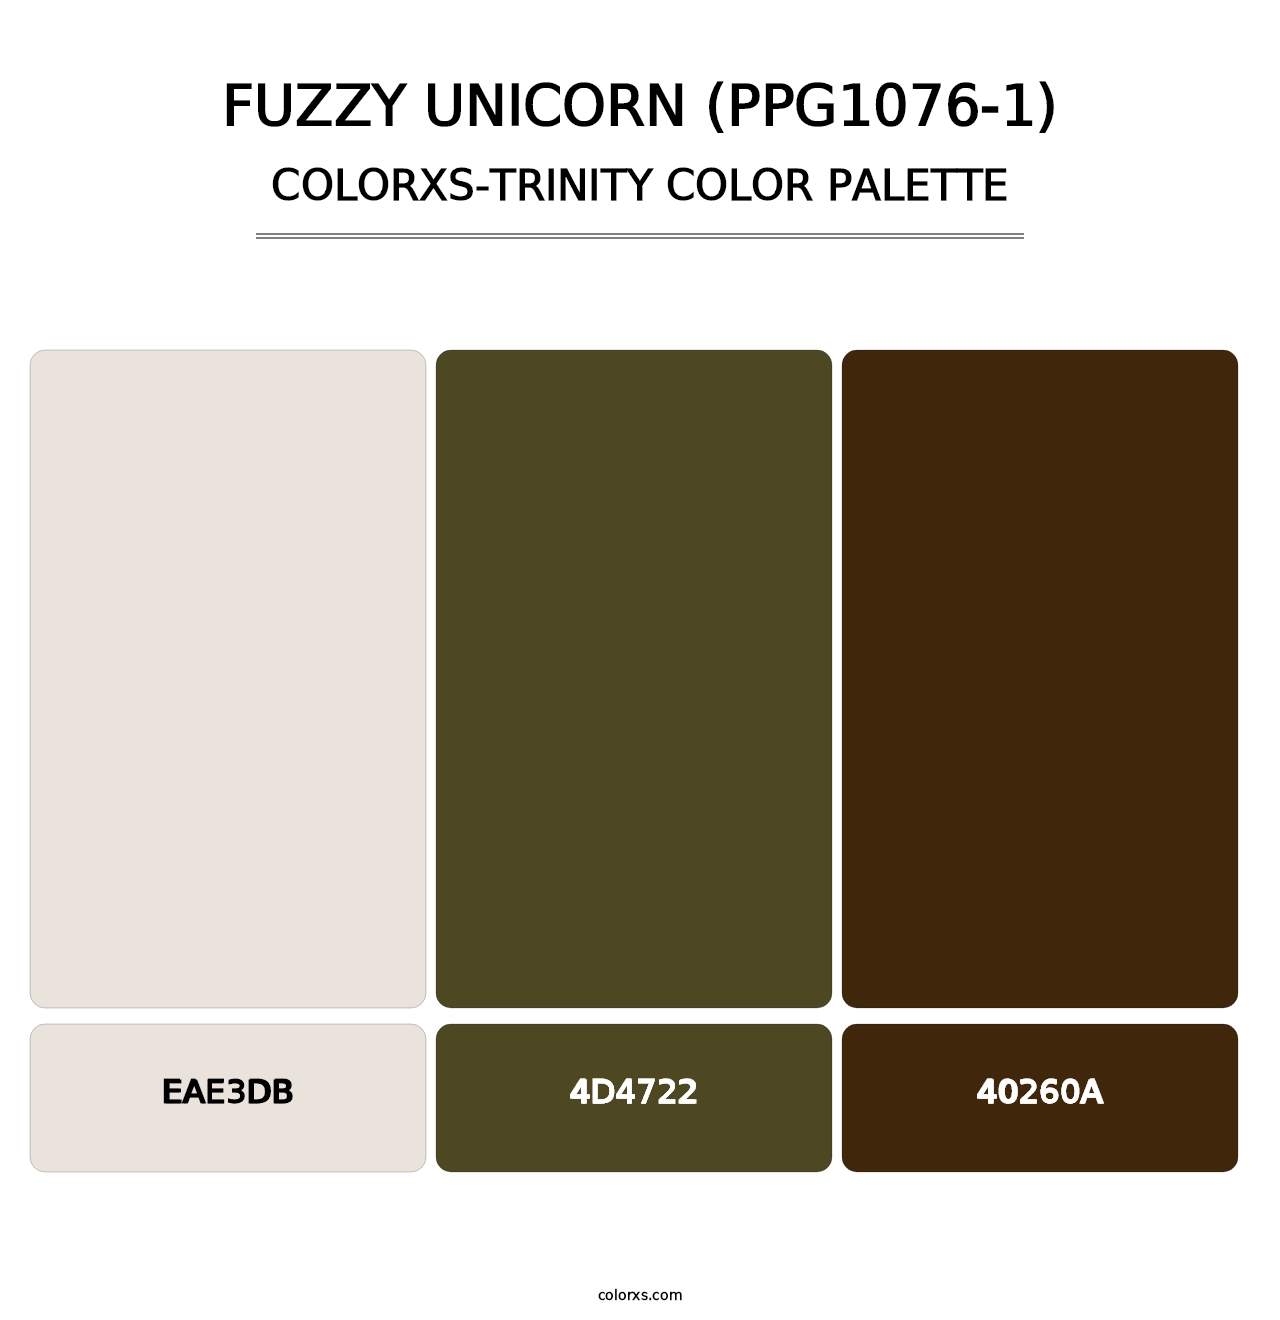 Fuzzy Unicorn (PPG1076-1) - Colorxs Trinity Palette